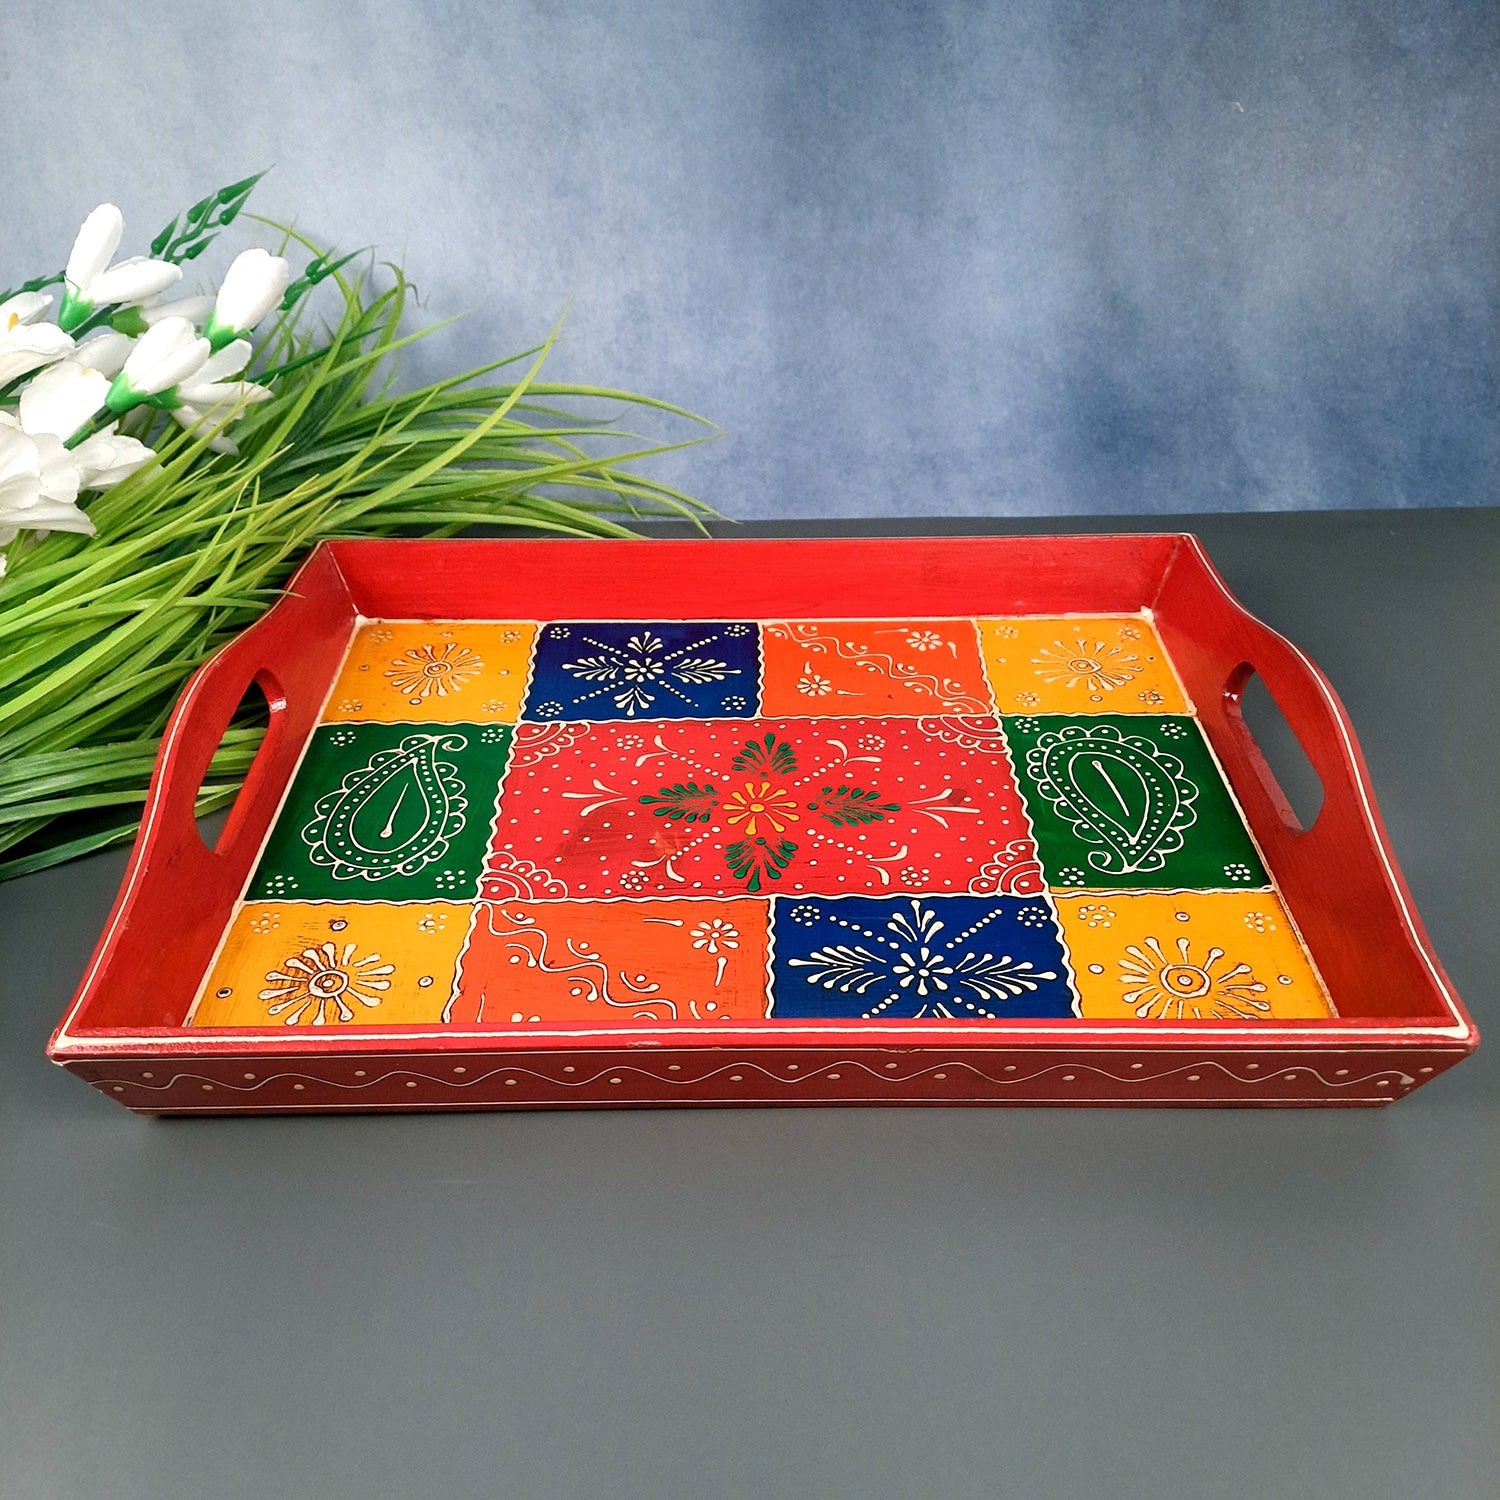 Serving Tray Wooden | Tea & Snacks Serving Platter - for Home, Dining Table, Kitchen Decor & Gift - 14 Inch - Apkamart